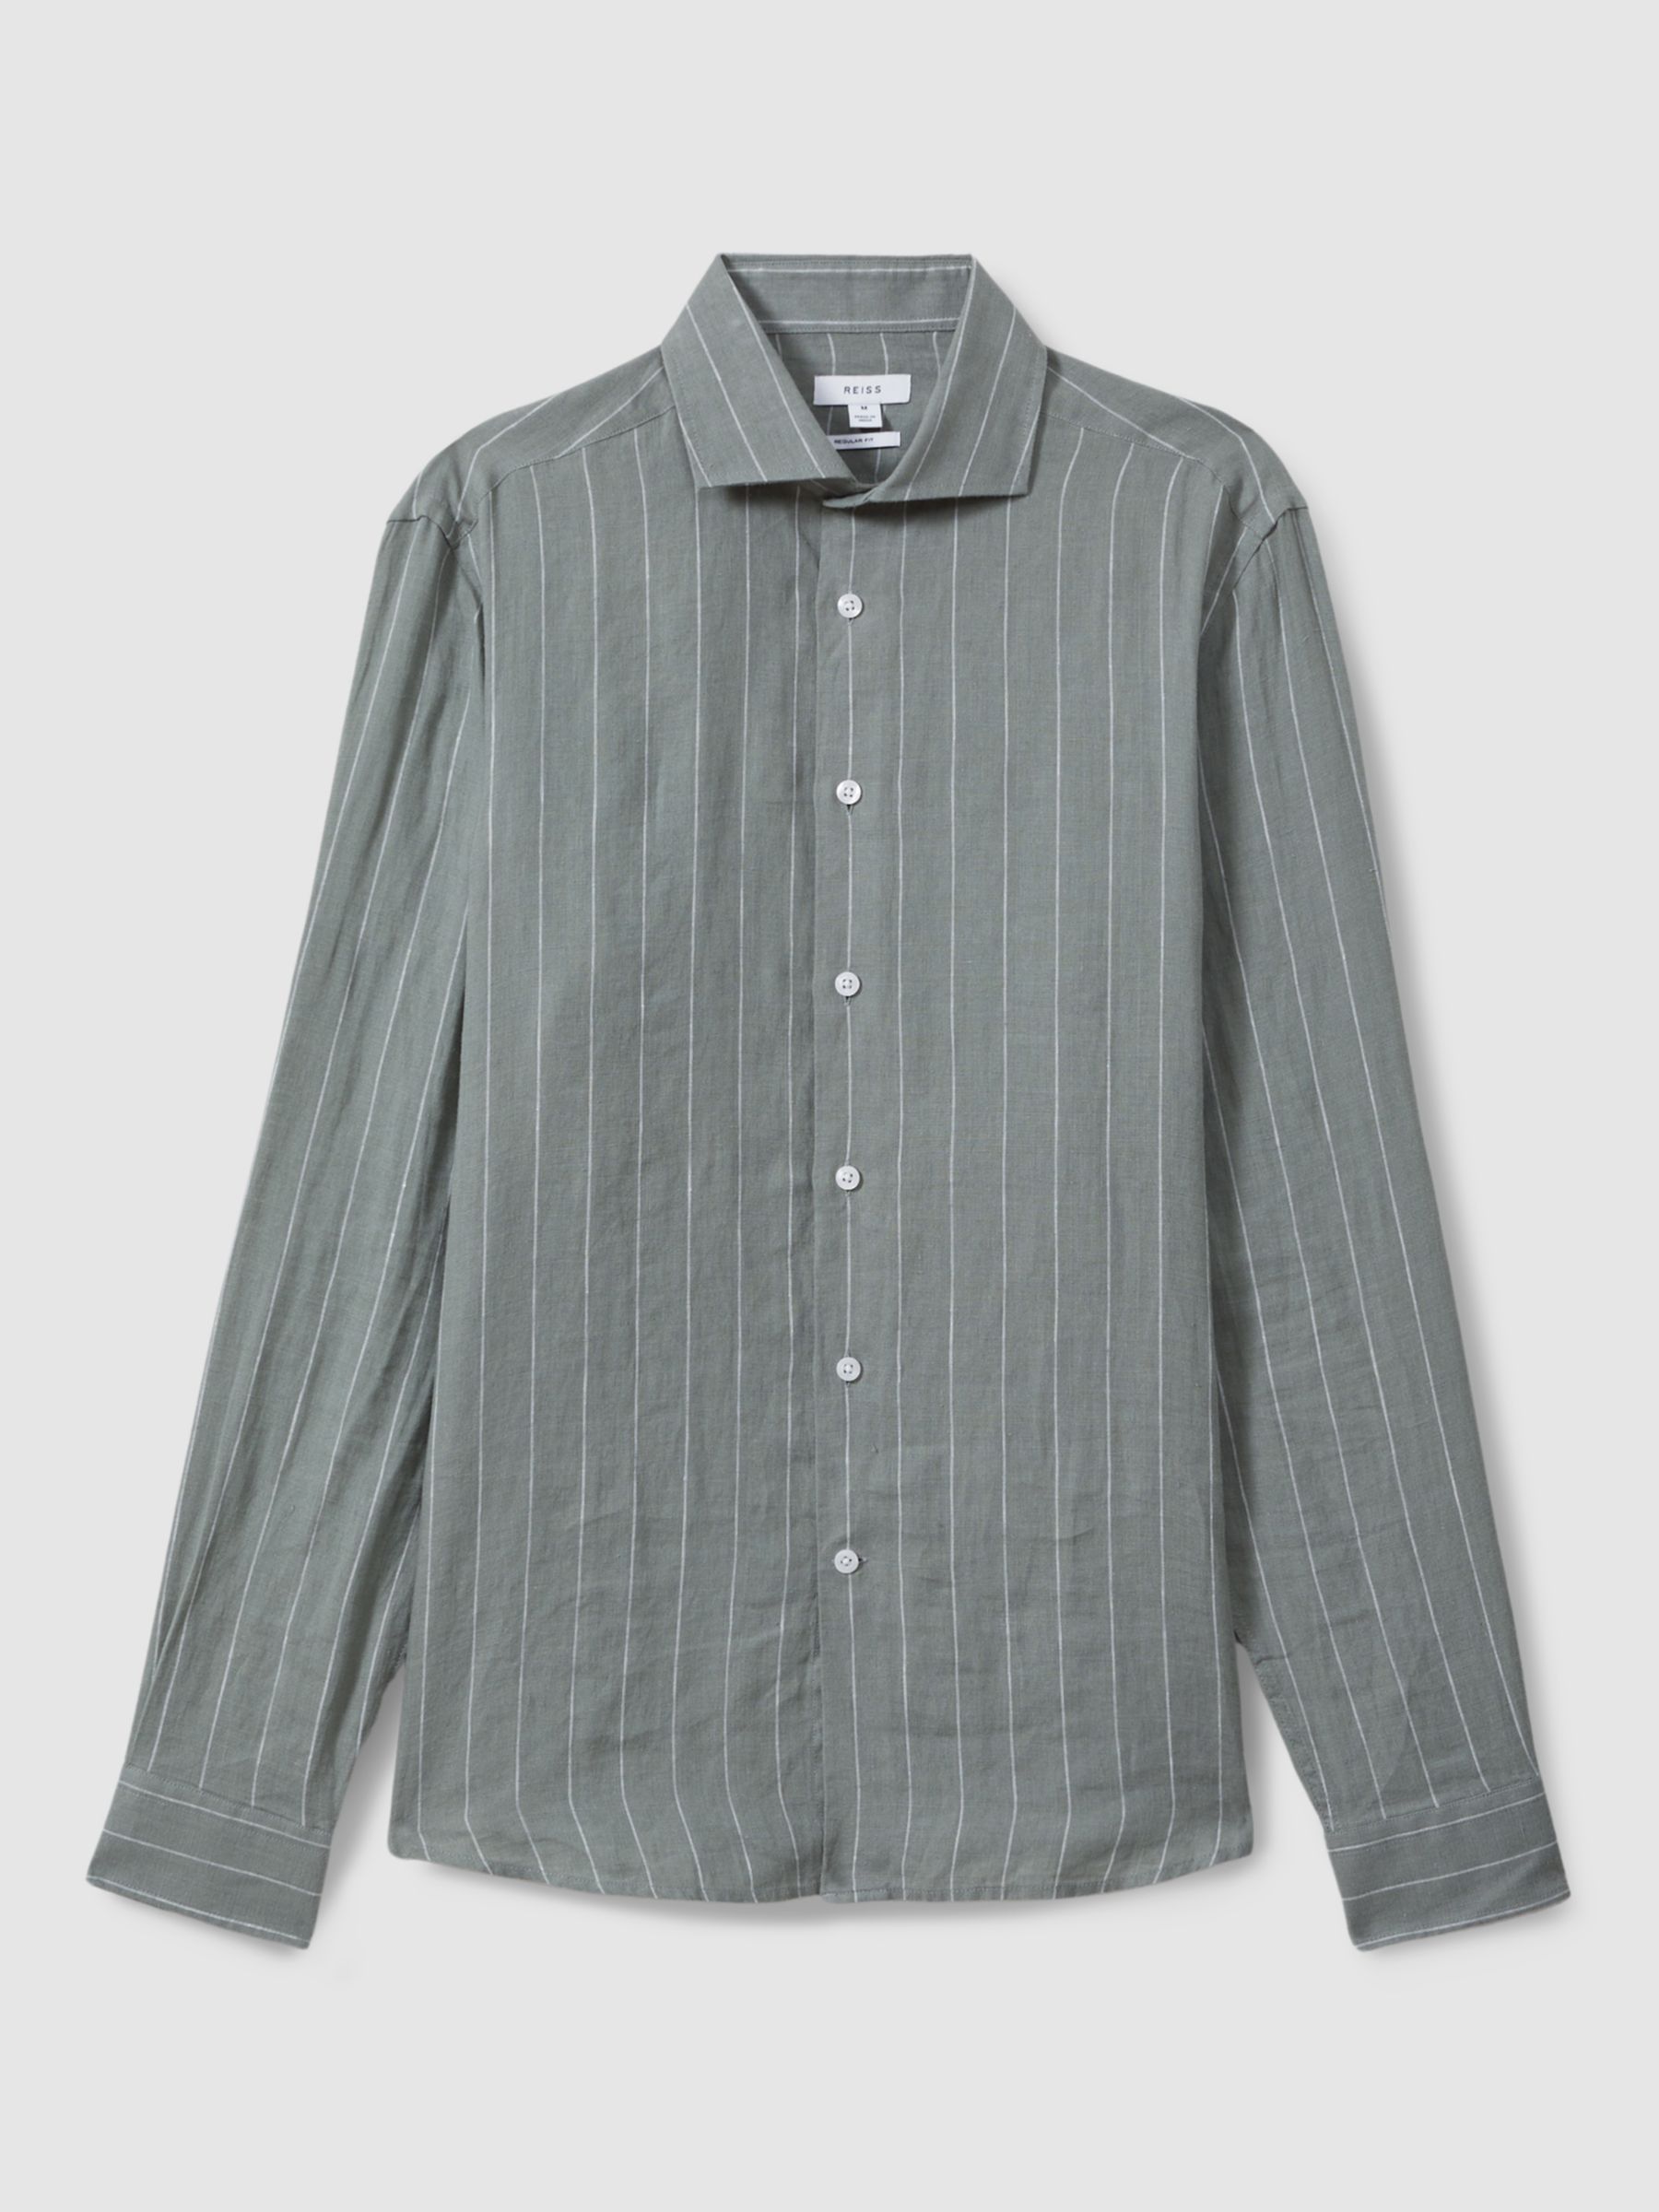 Reiss Ruban Striped Linen Shirt, Sage, XS